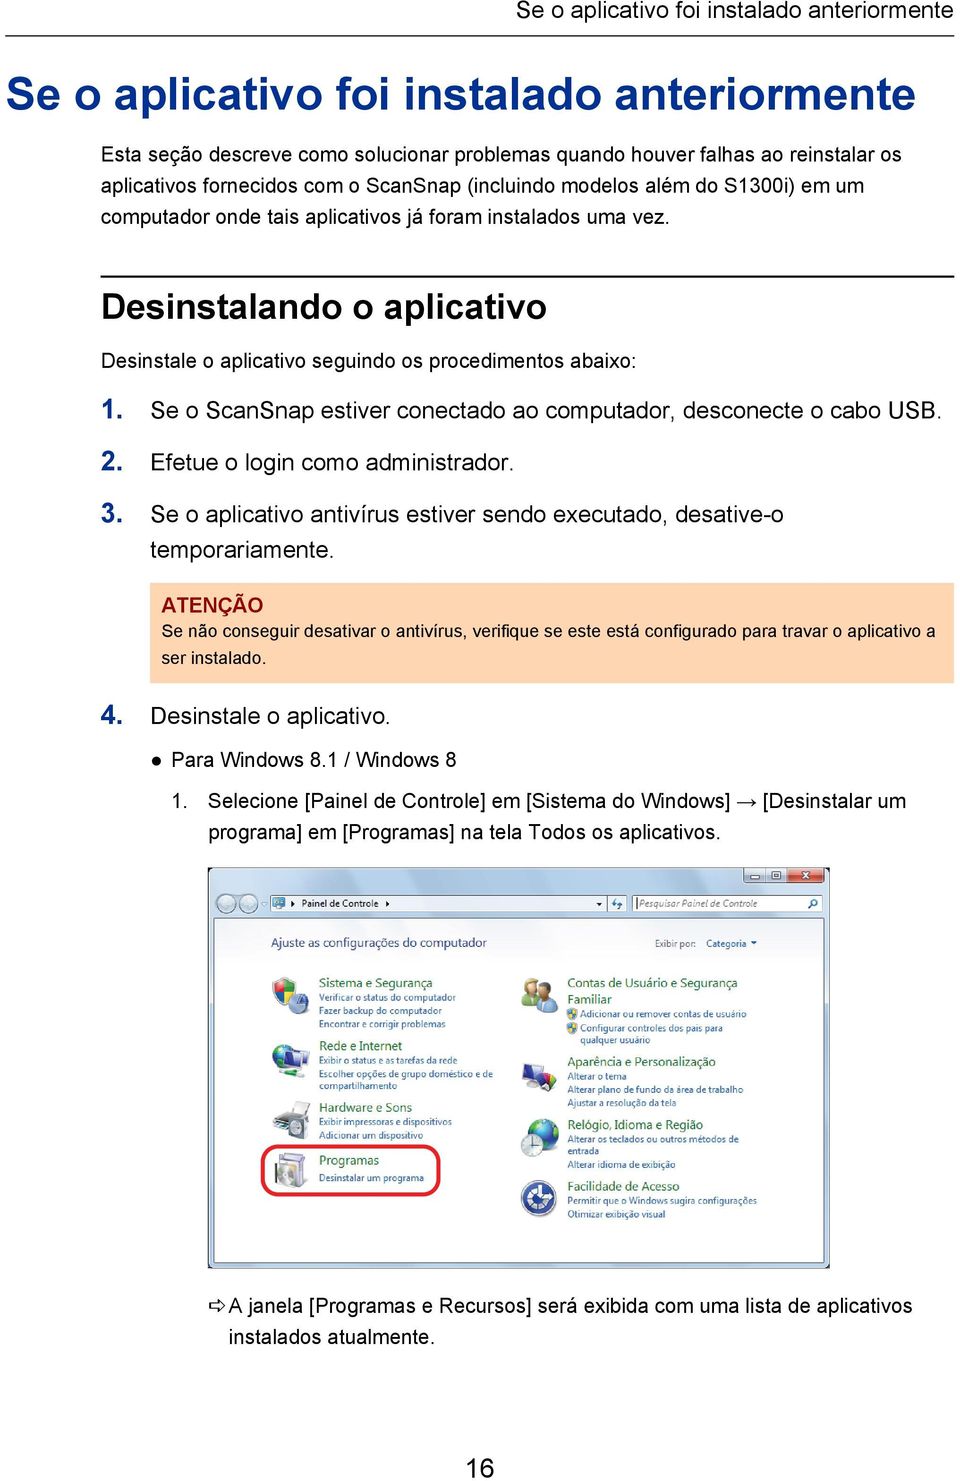 Desinstalando o aplicativo Desinstale o aplicativo seguindo os procedimentos abaixo: 1. Se o ScanSnap estiver conectado ao computador, desconecte o cabo USB. 2. Efetue o login como administrador. 3.